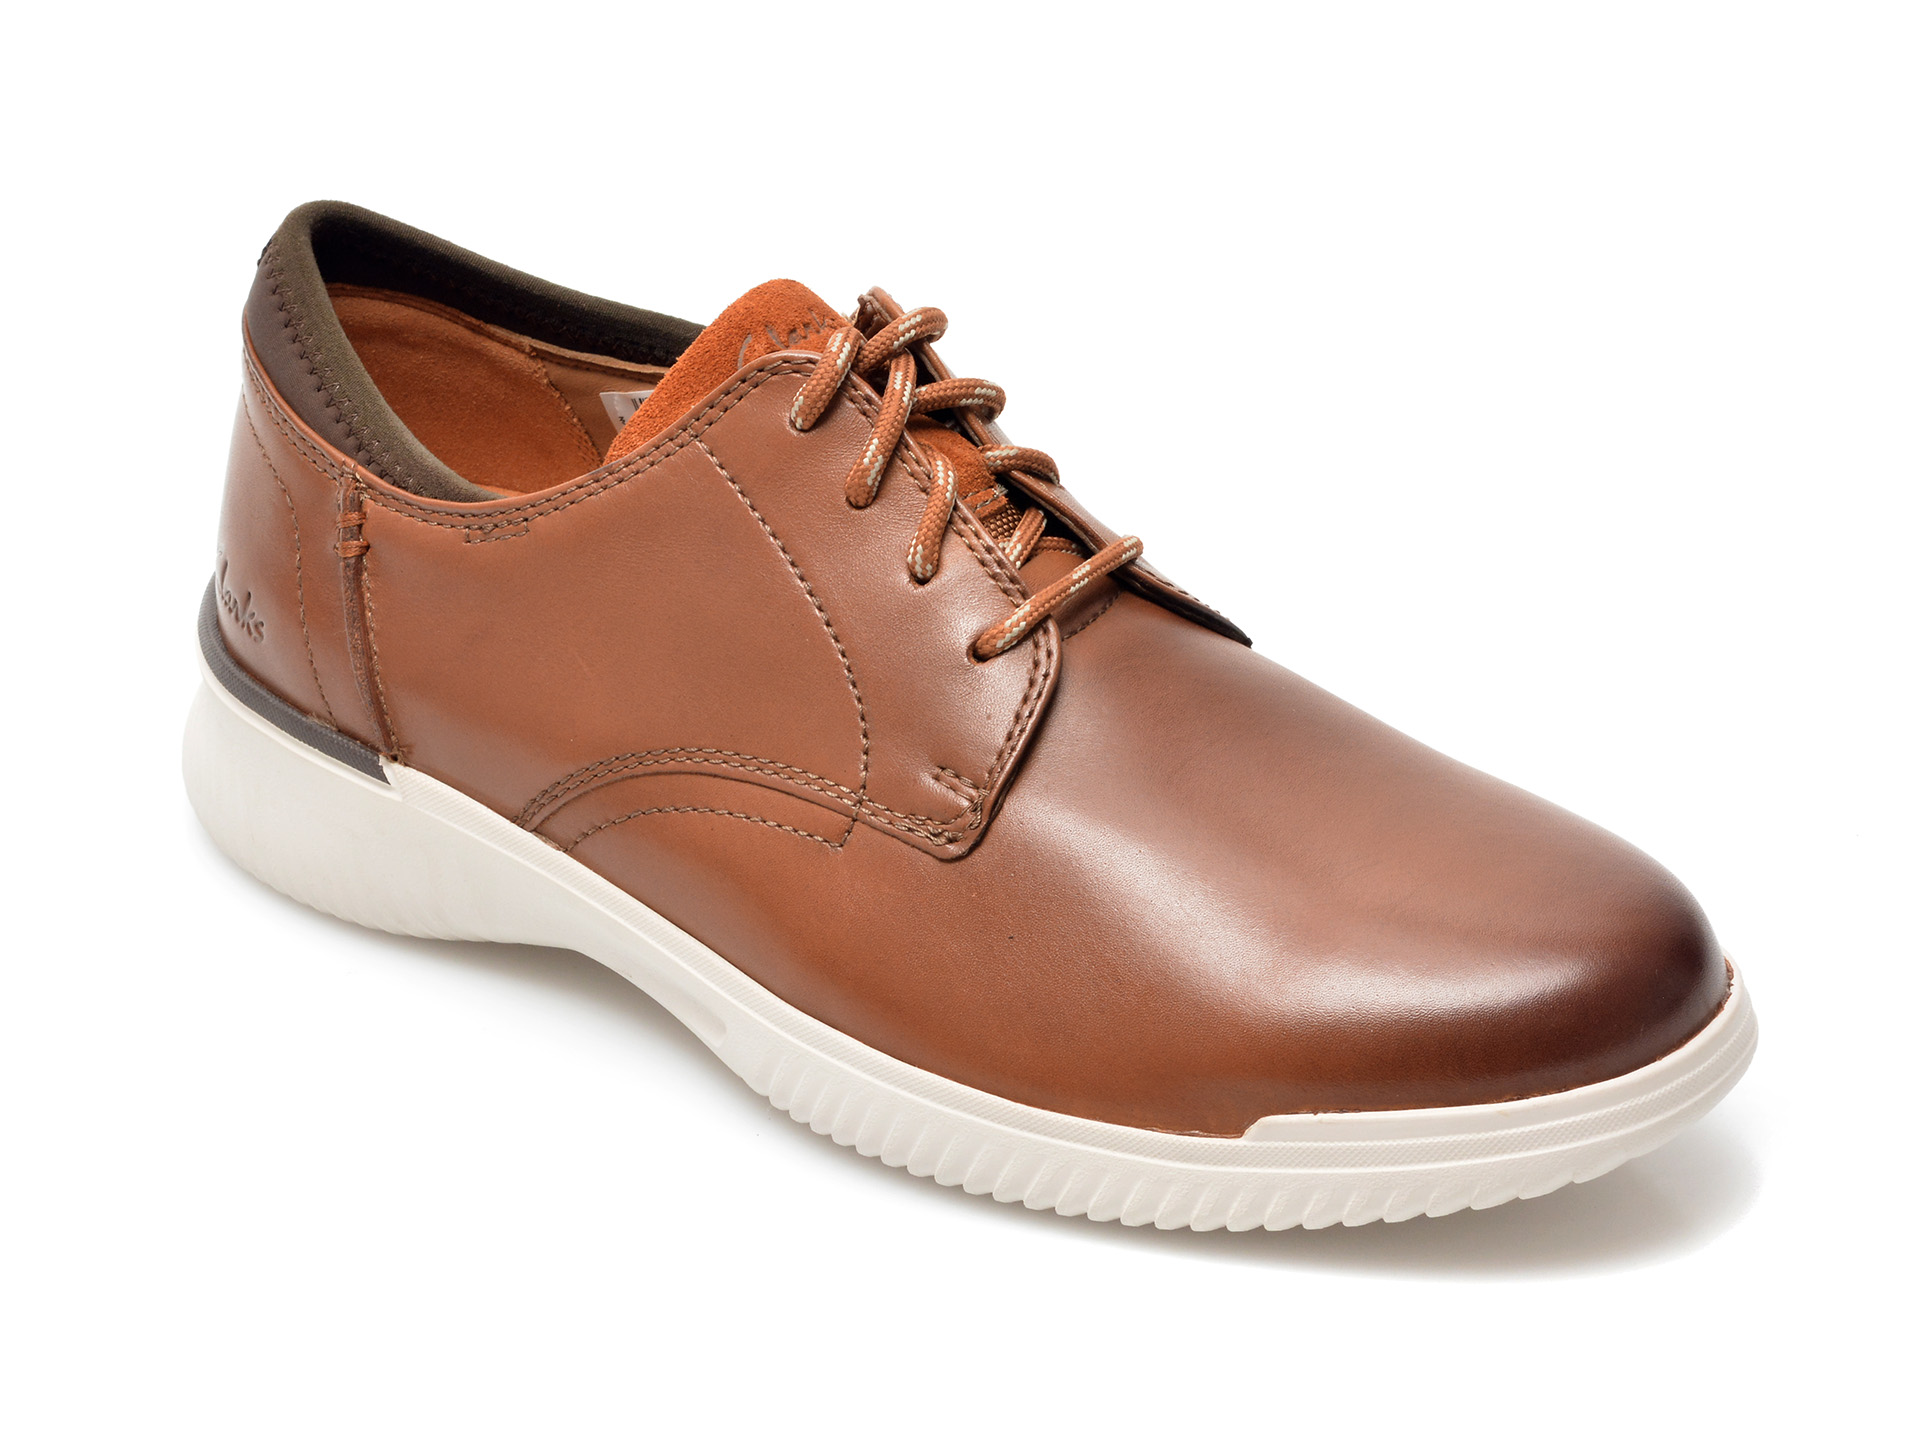 Pantofi CLARKS maro, DONAWAY PLAIN, din piele naturala Clarks imagine 2022 reducere